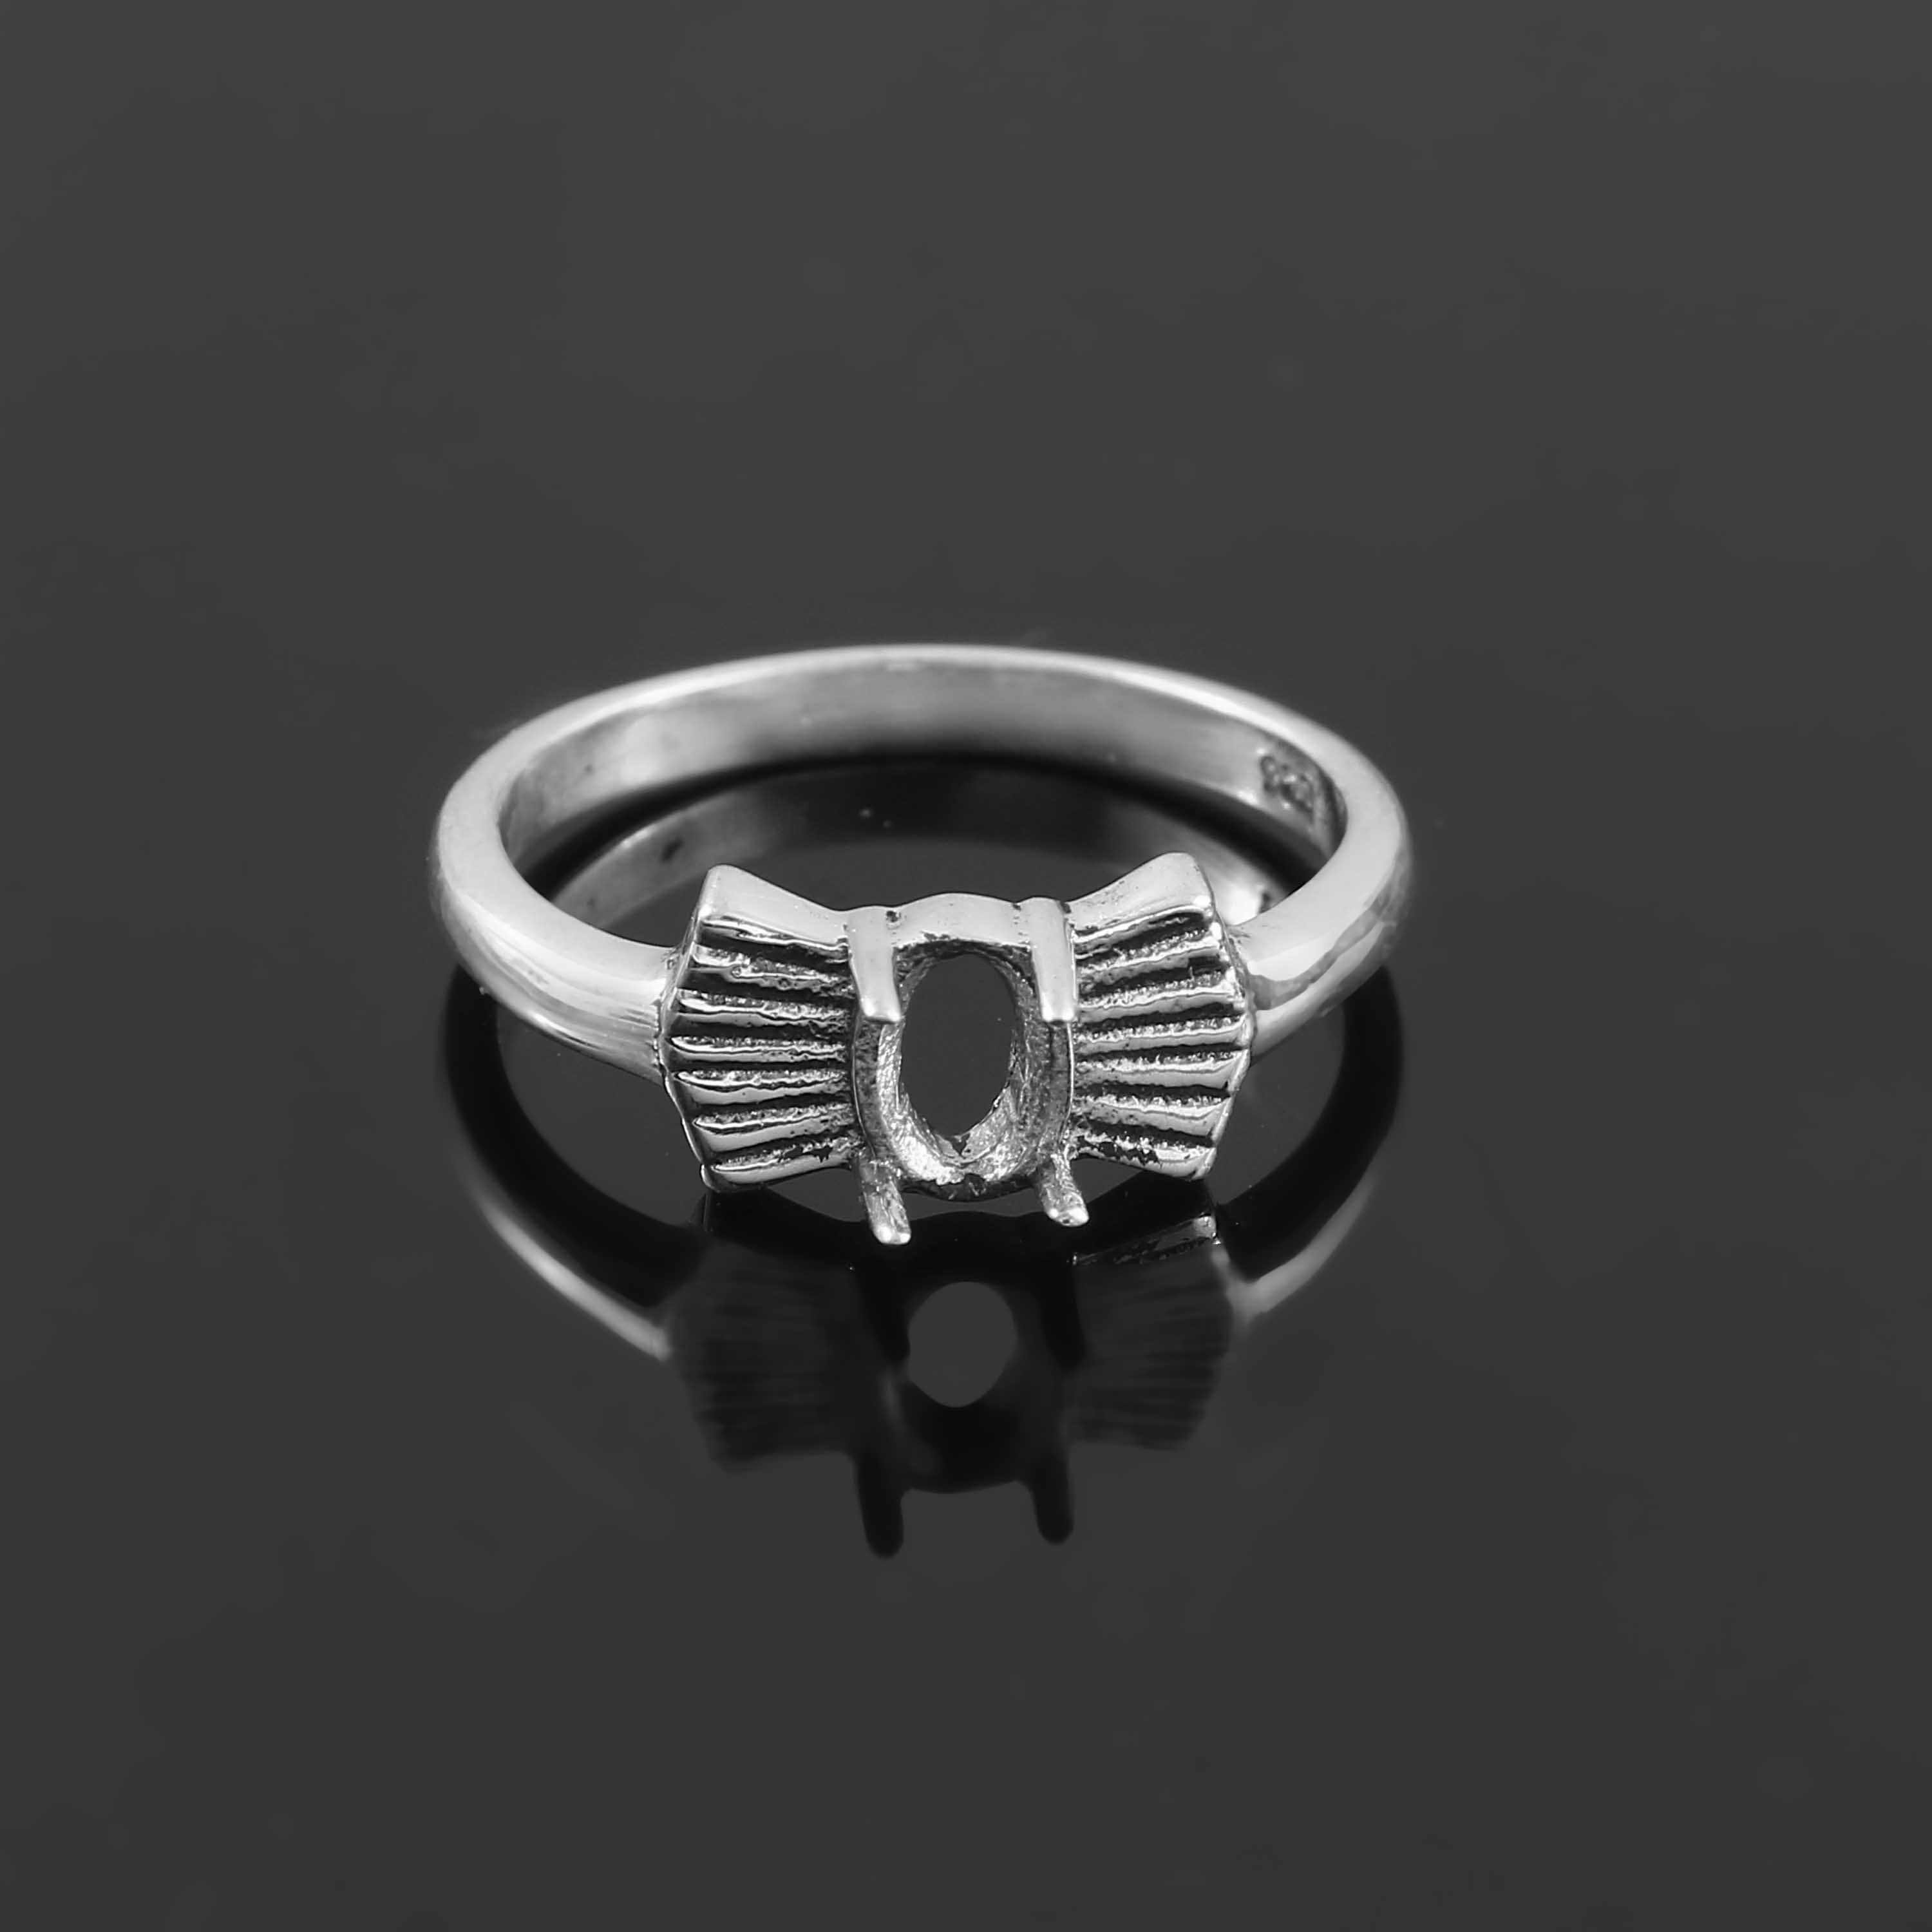 New Arrive Oval Cut Mount Ring DJP-08 Oval Brilliant Mount Moissanite Ring Wedding Ring Gift For Her Semi-Mount Engagement Ring